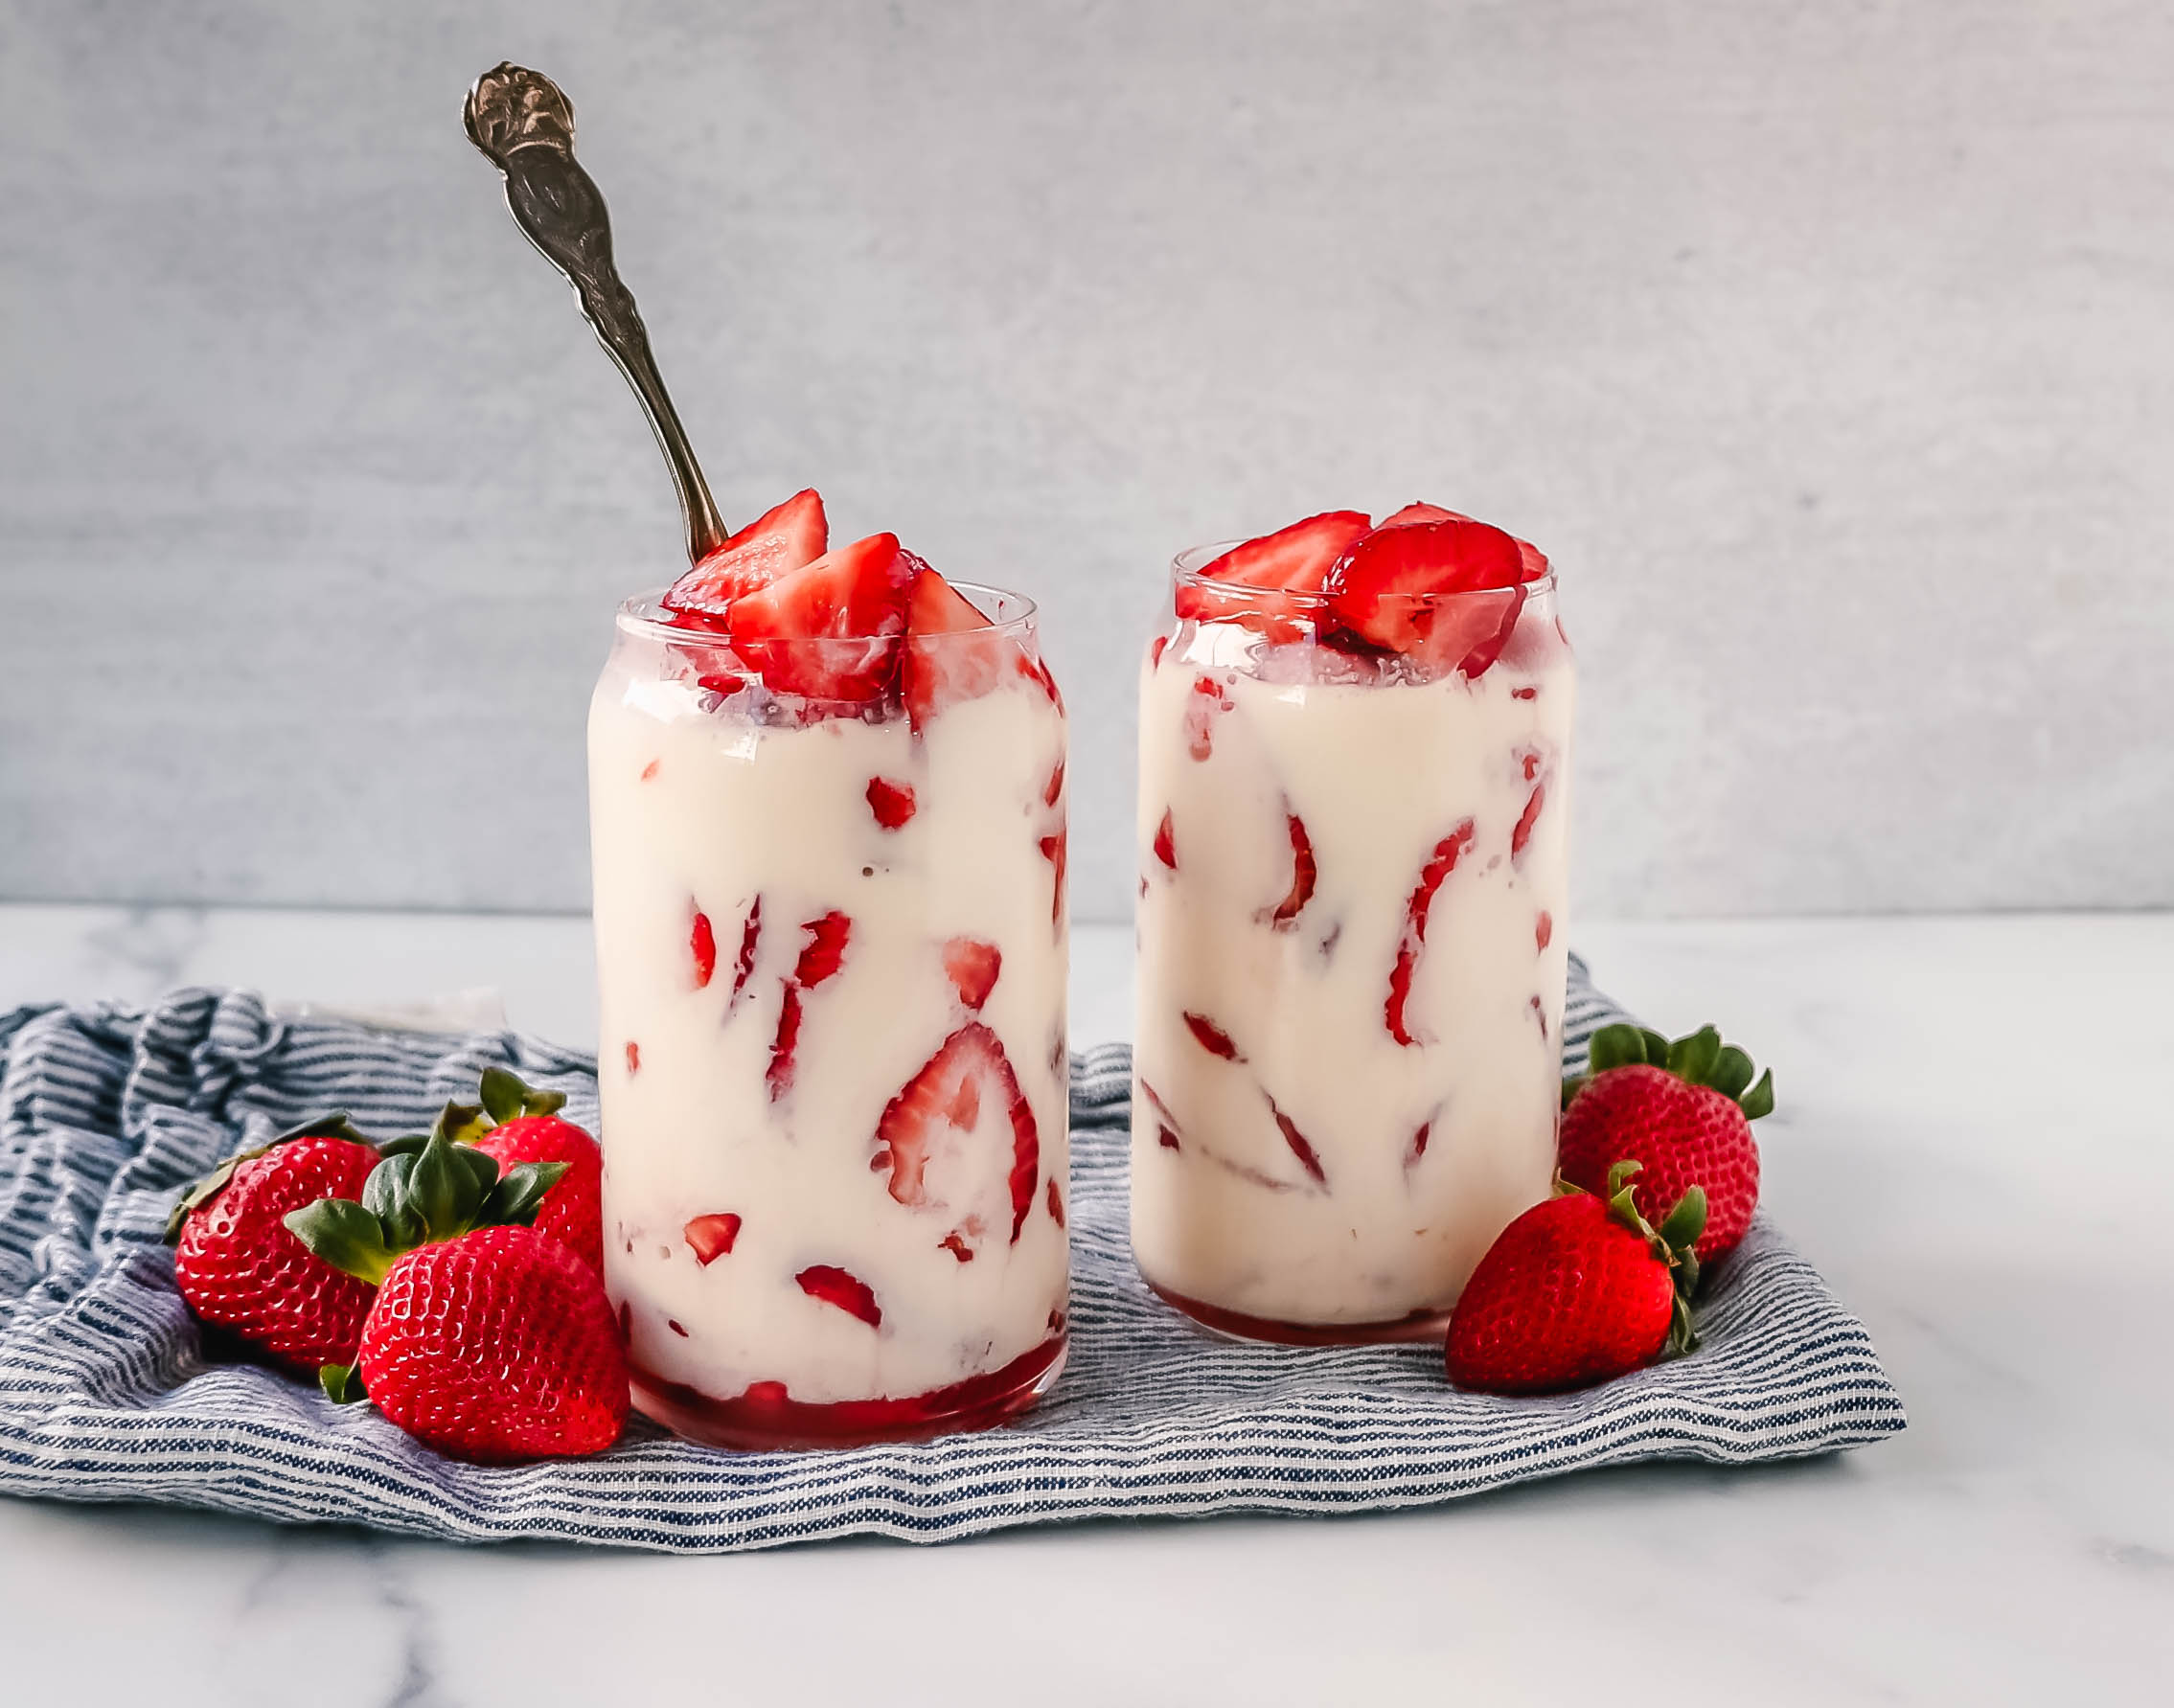 Modern Fresas Cream) Honey – con (Strawberries and Crema